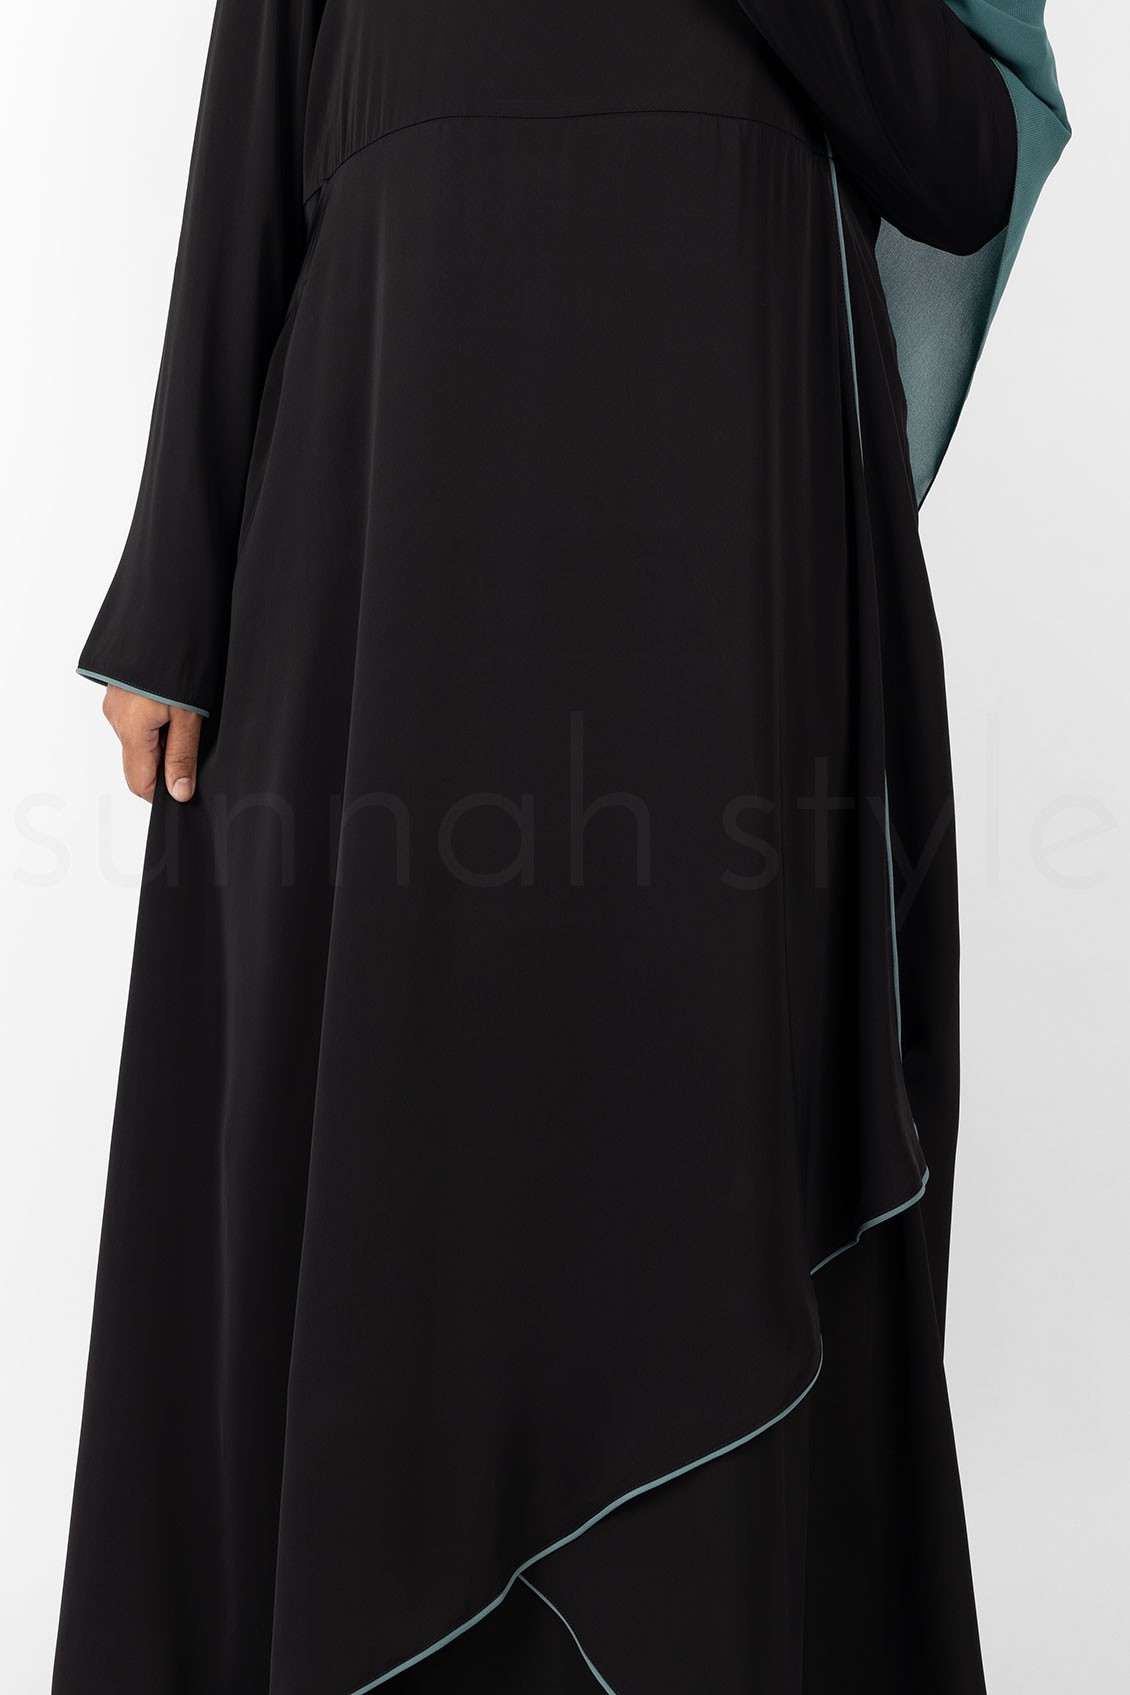 Sunnah Style Anemone Layered Abaya Black Teal